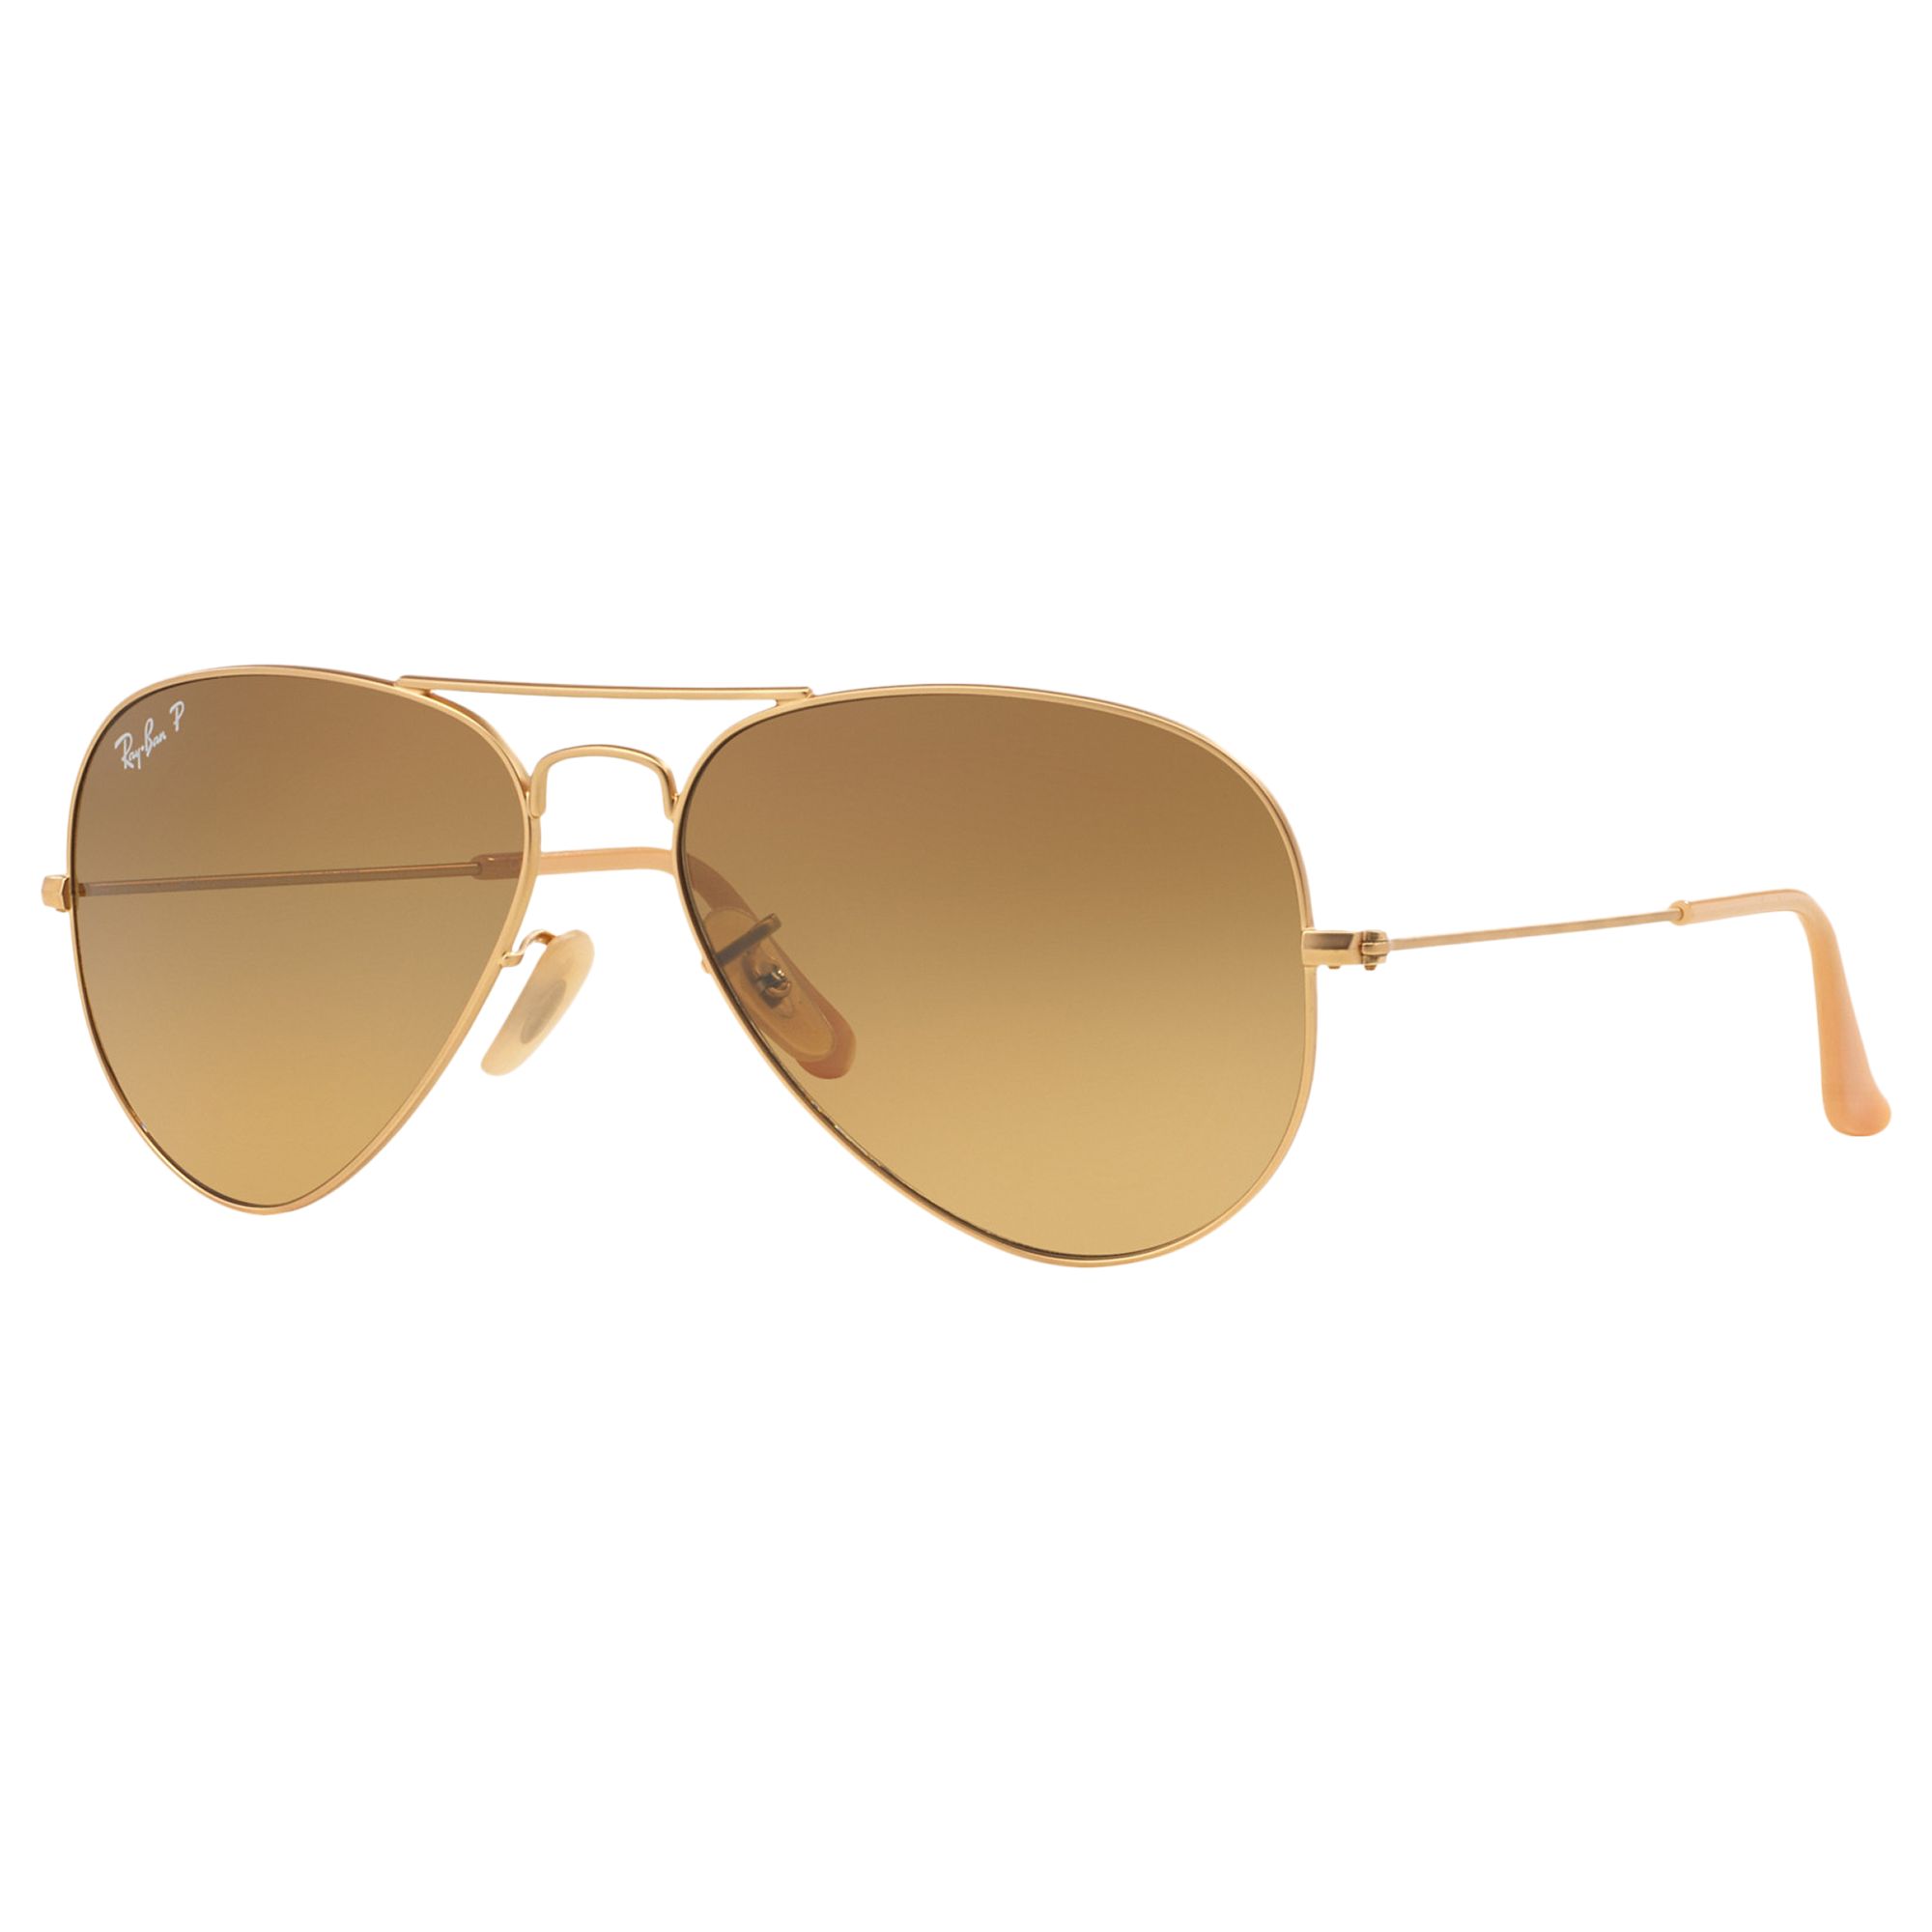 Ray Ban Rb3025 Polarised Original Aviator Sunglasses Gold Brown Gradient At John Lewis Partners